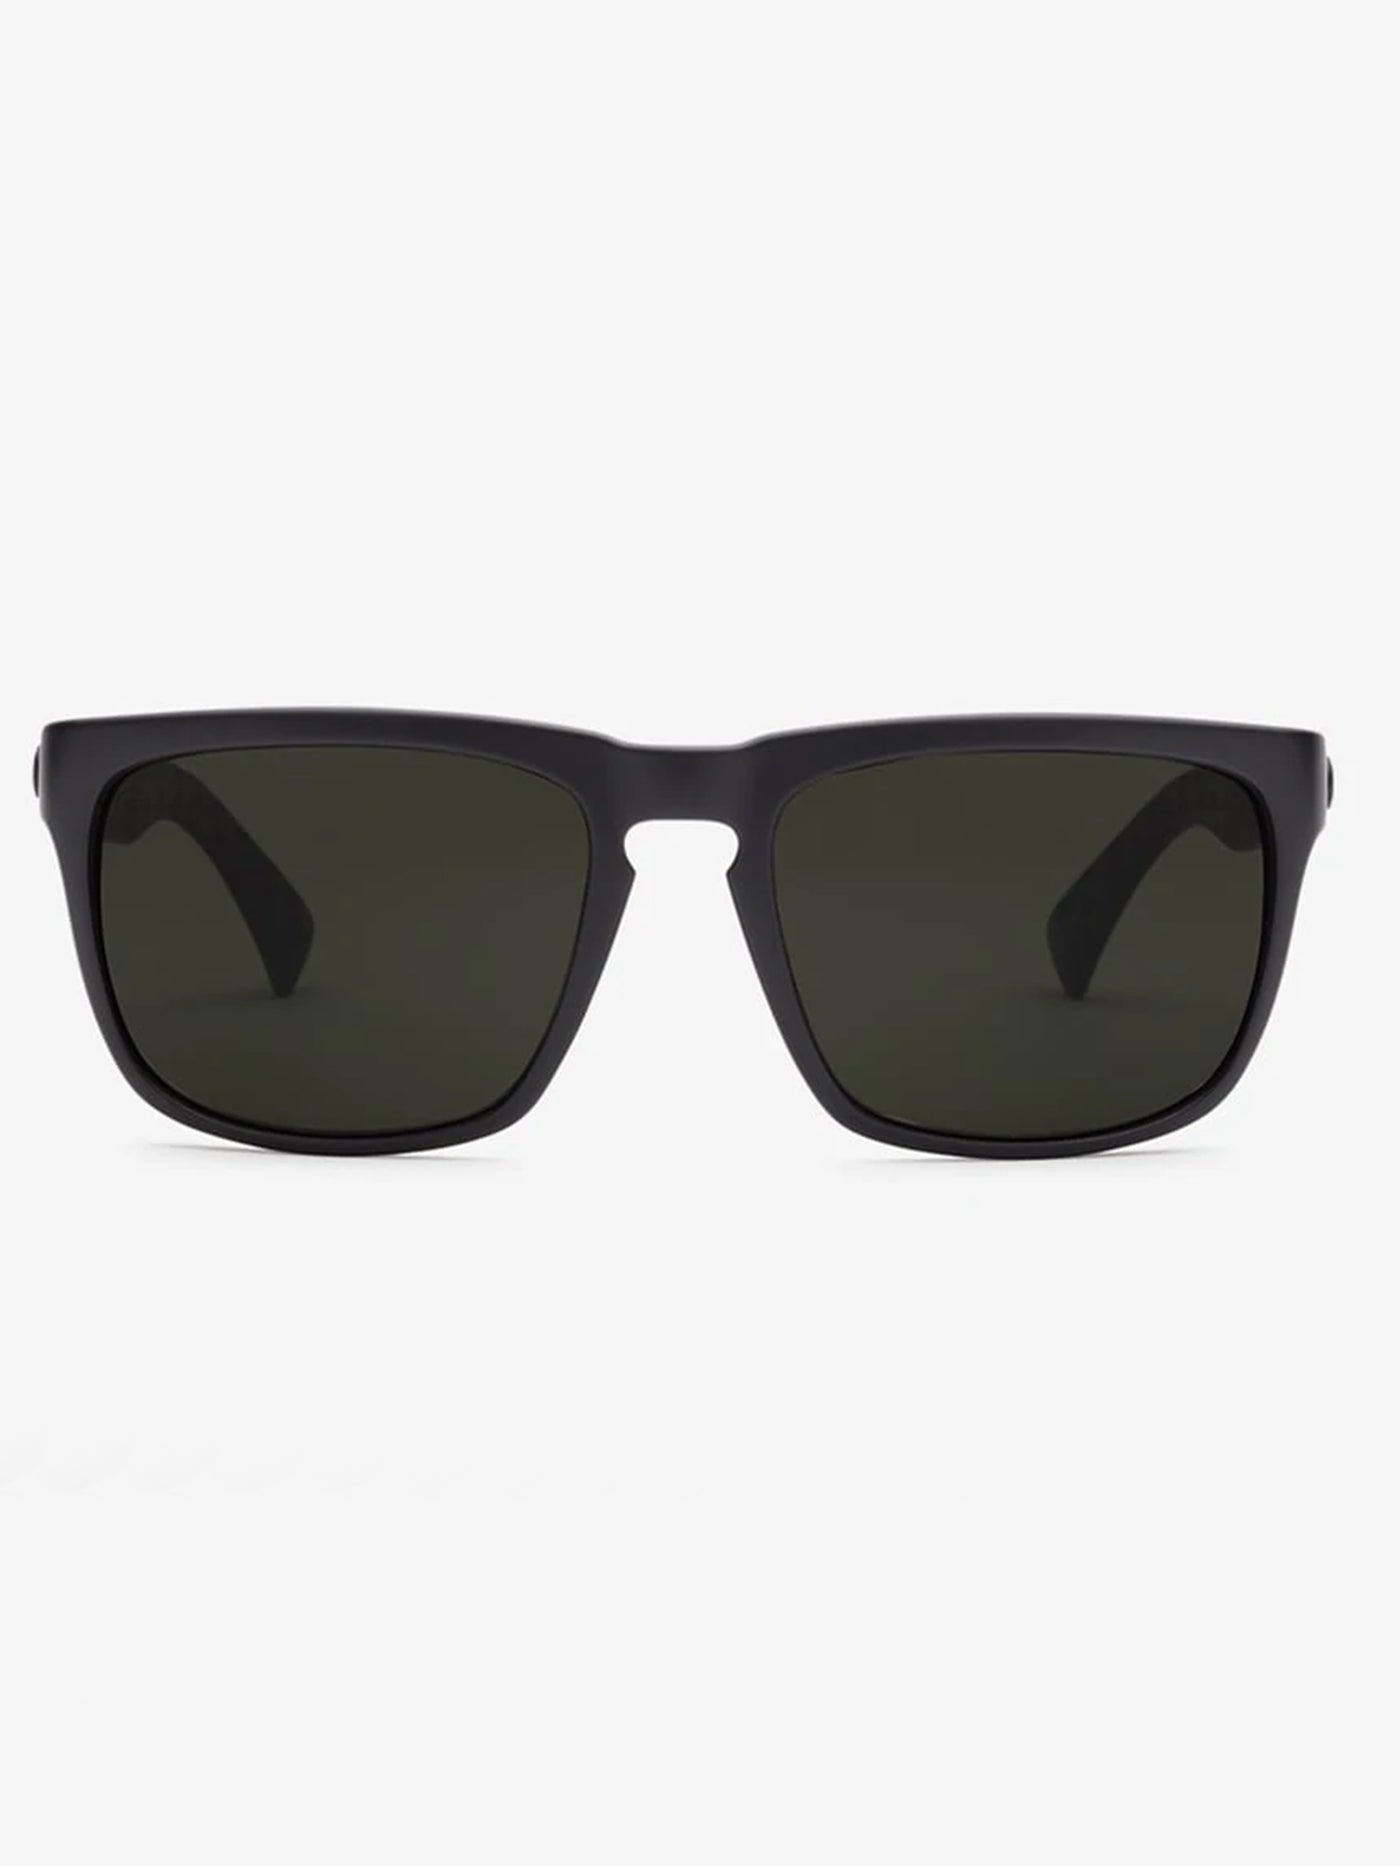 Electric Jason Momoa Knoxville XL Polarized Sunglasses